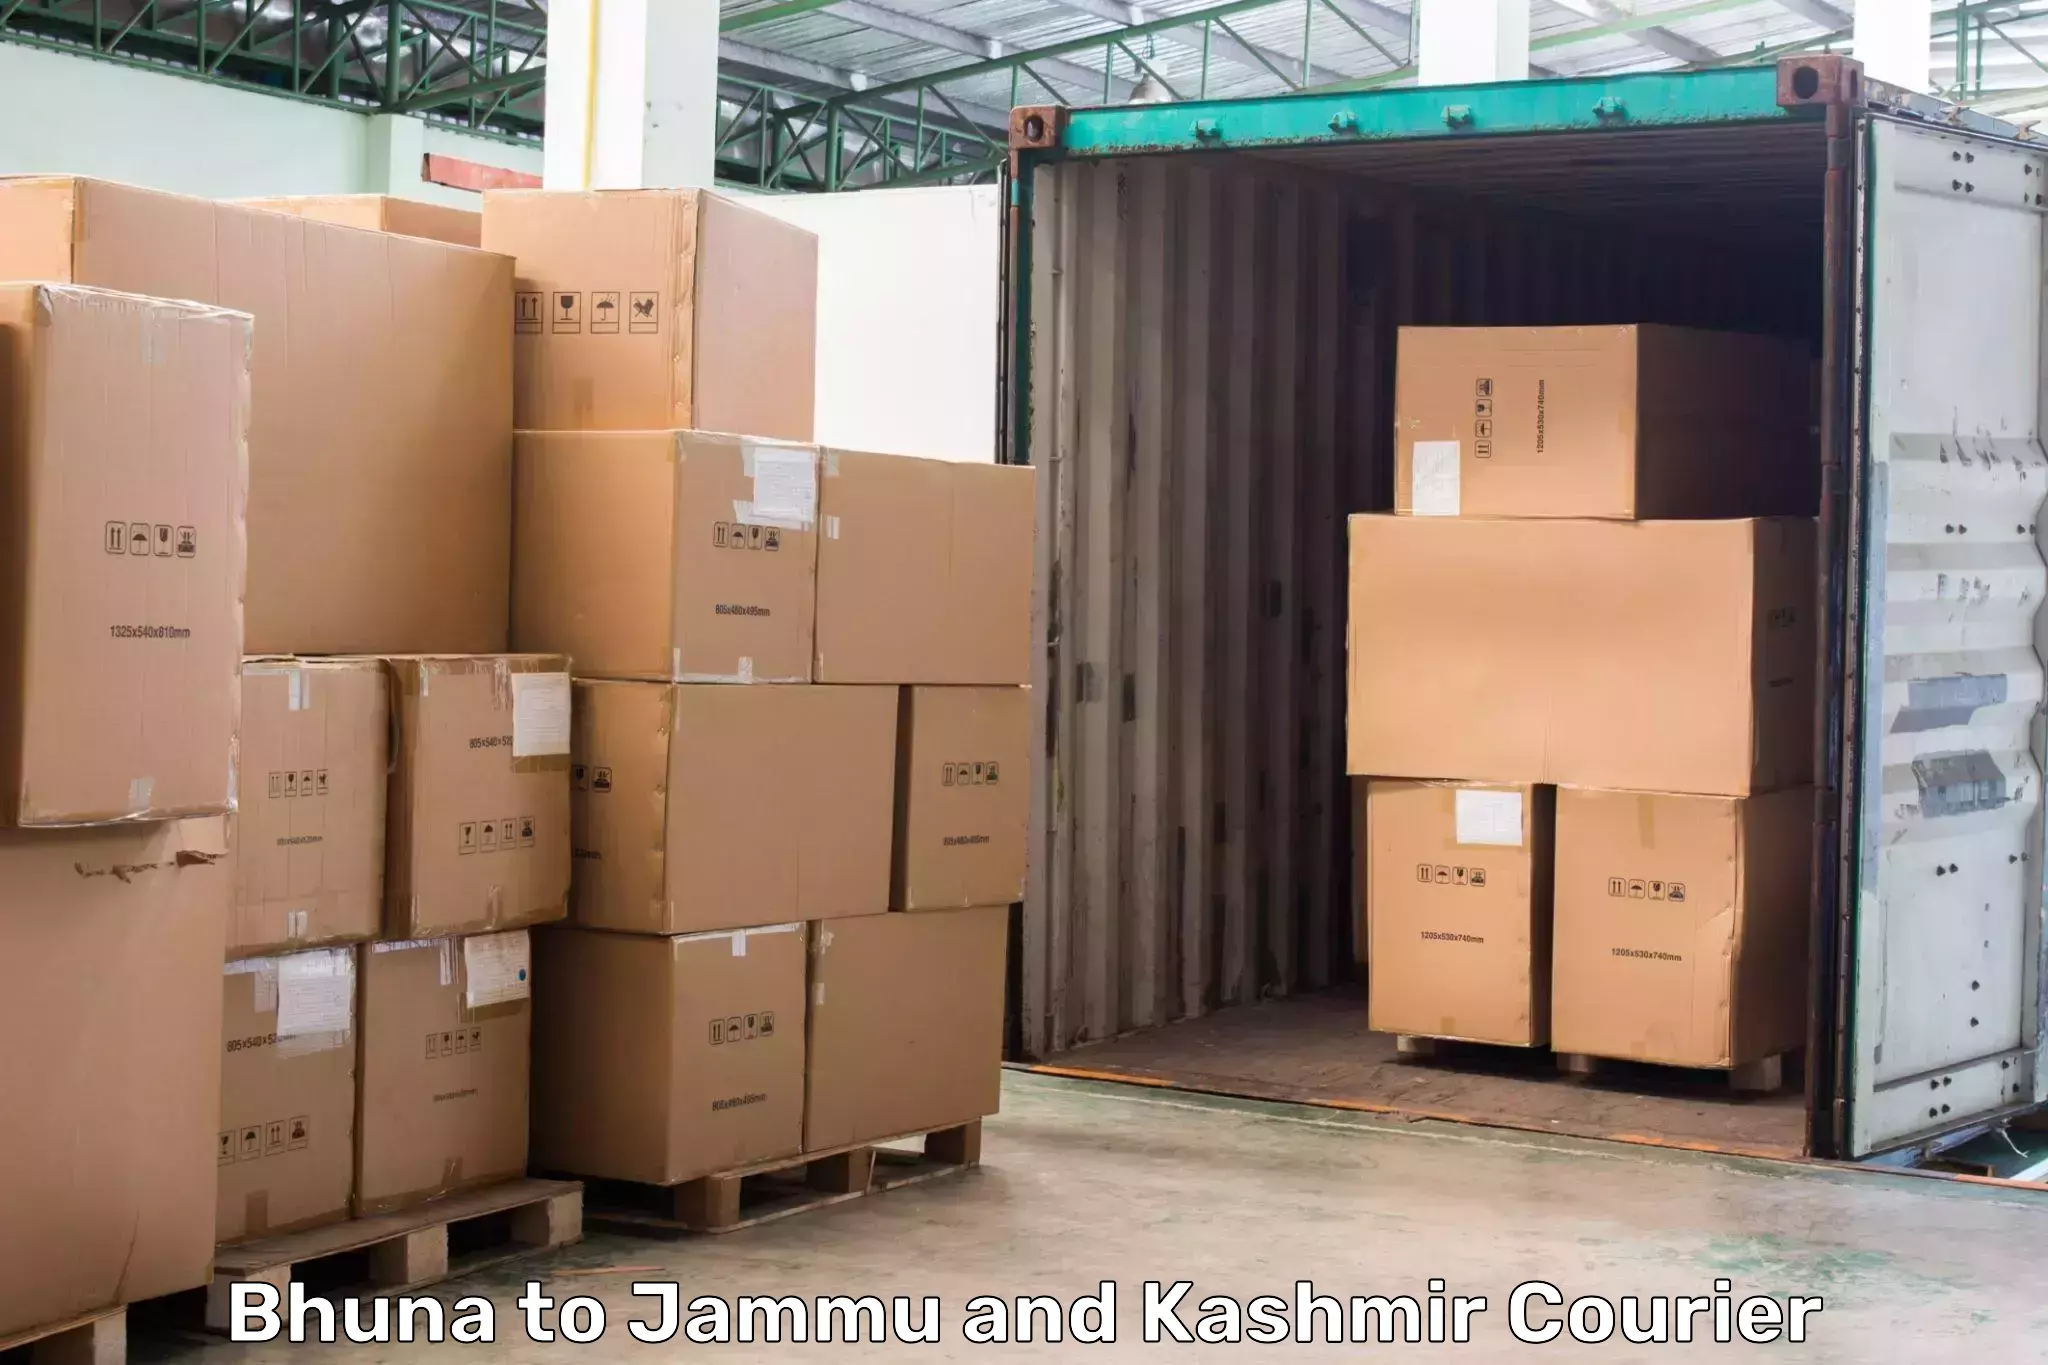 Global shipping networks Bhuna to Jammu and Kashmir